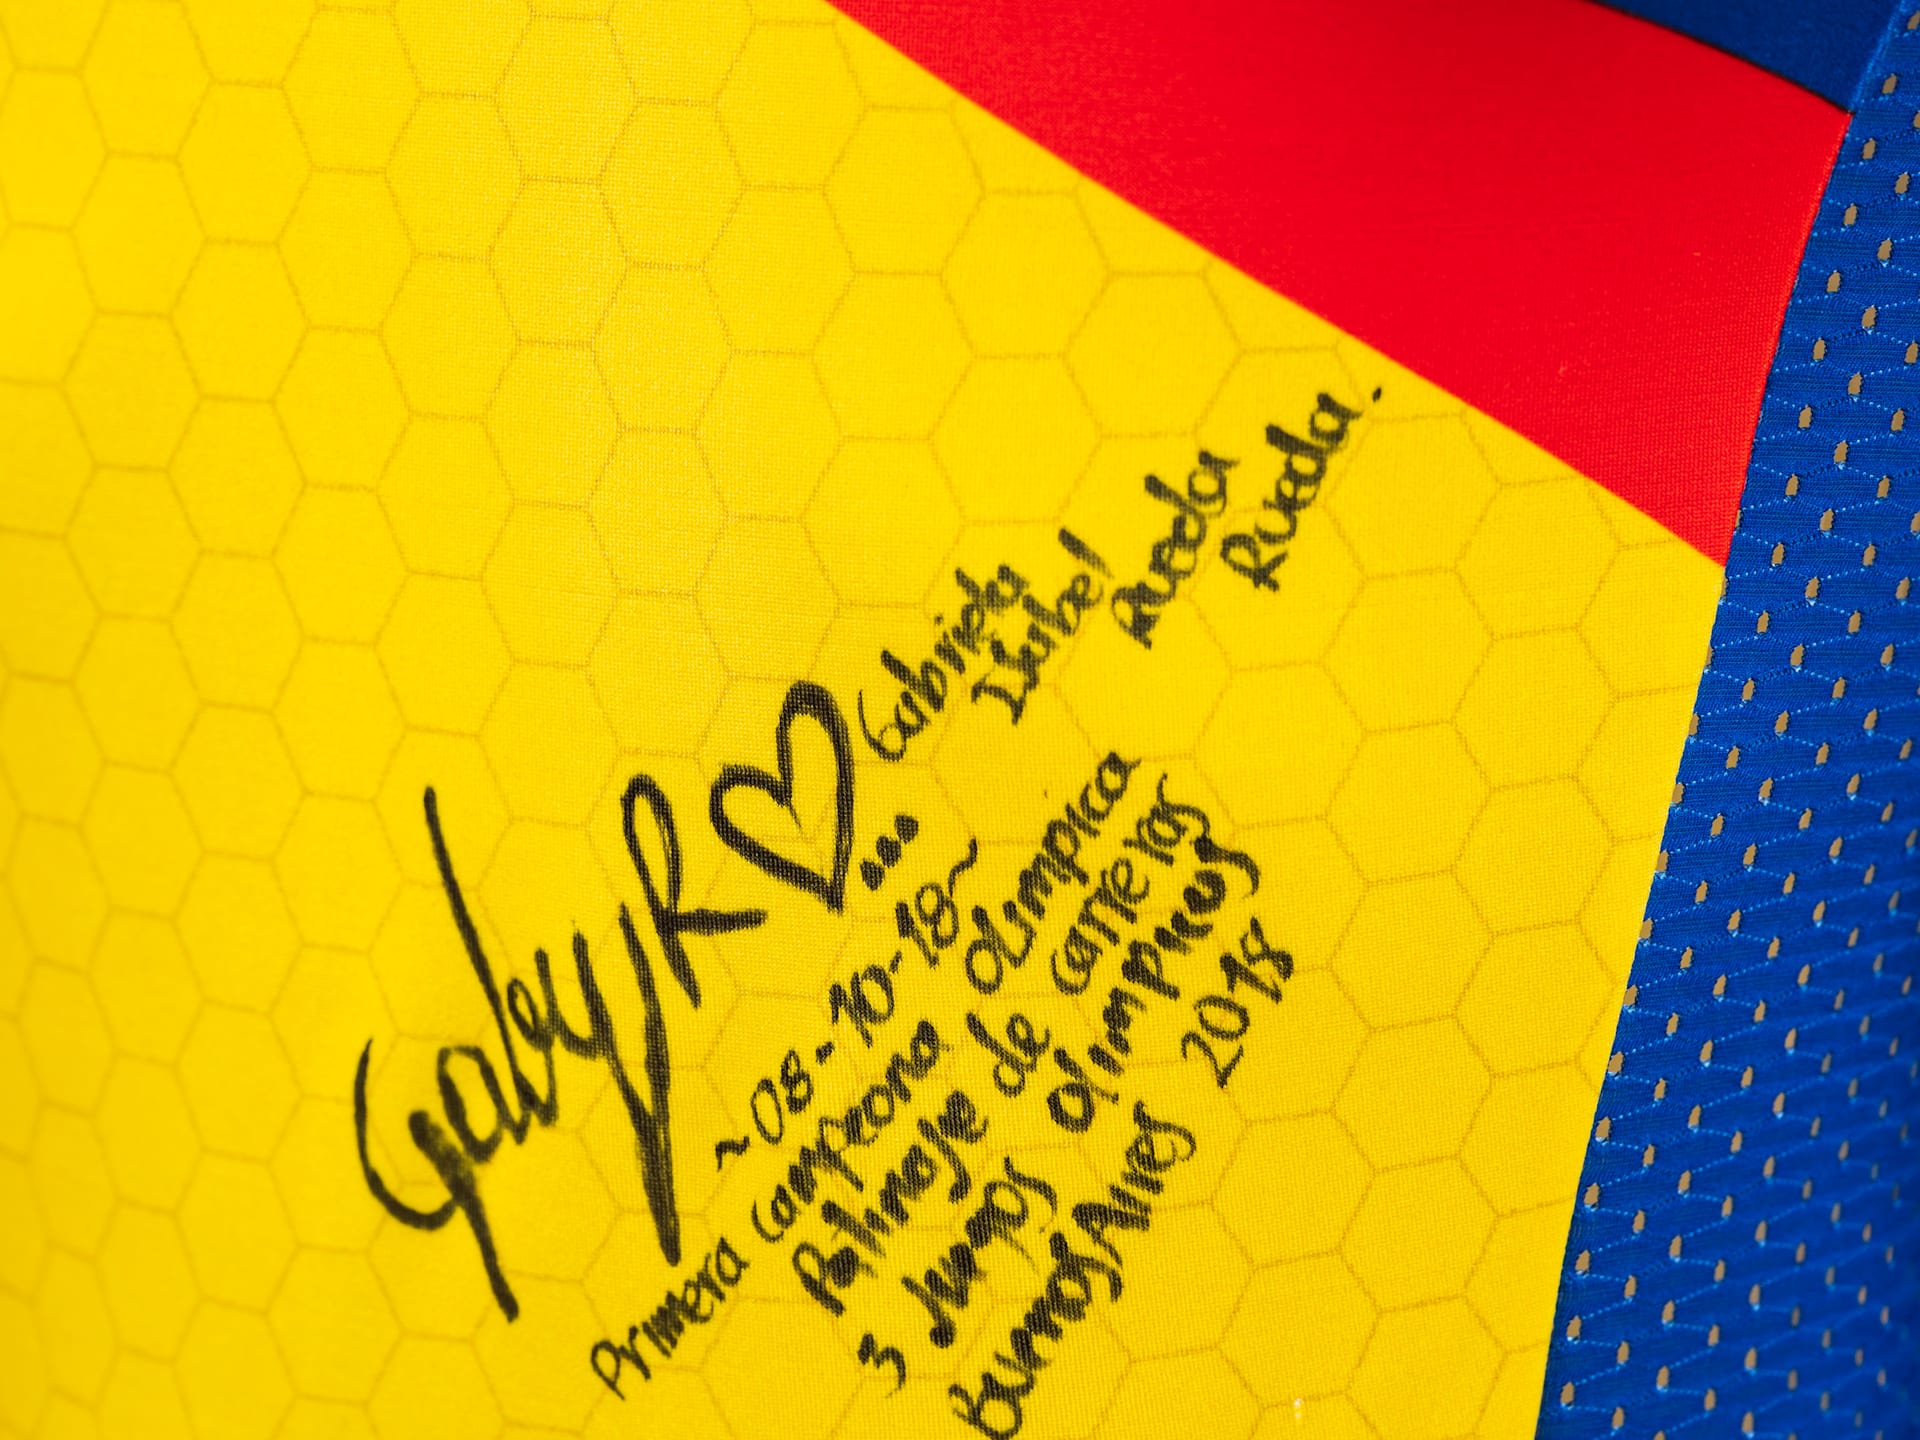 Close up of Gabriela Rueda's signature